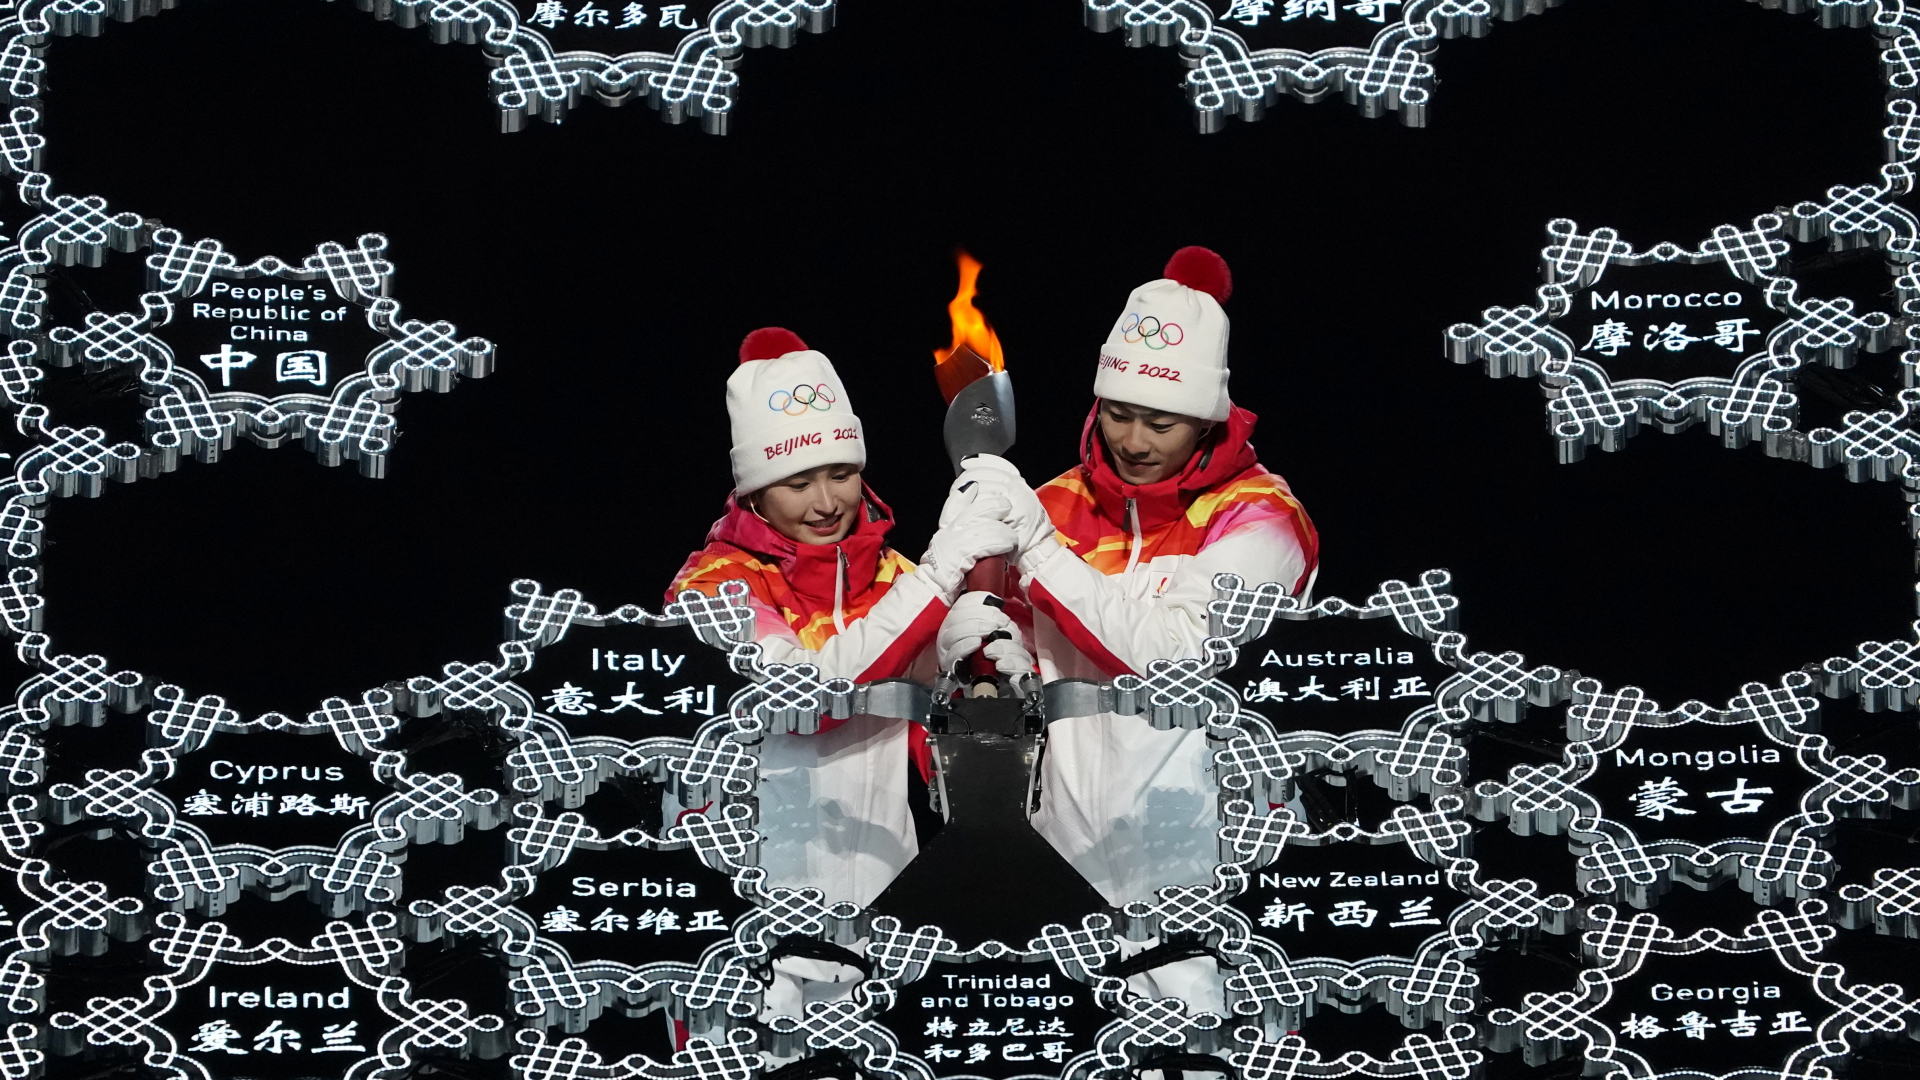 Die Entzündung des Olympischen Feuers durch Dinigeer Yilamujiang und Zhao Jiawen | dpa